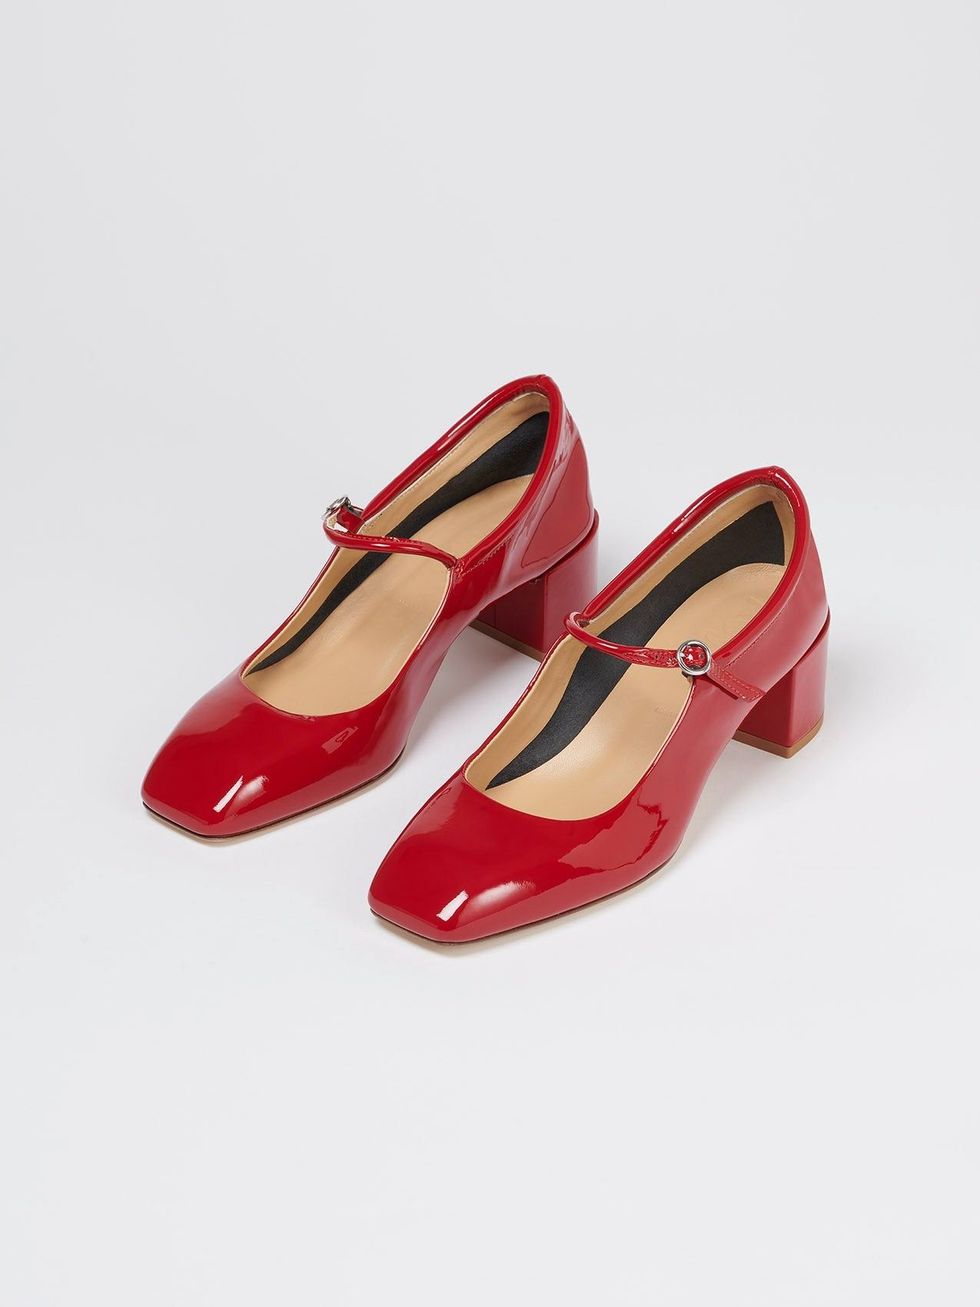 Vintage '60s flat shoes & fashionable low-heel footwear for women